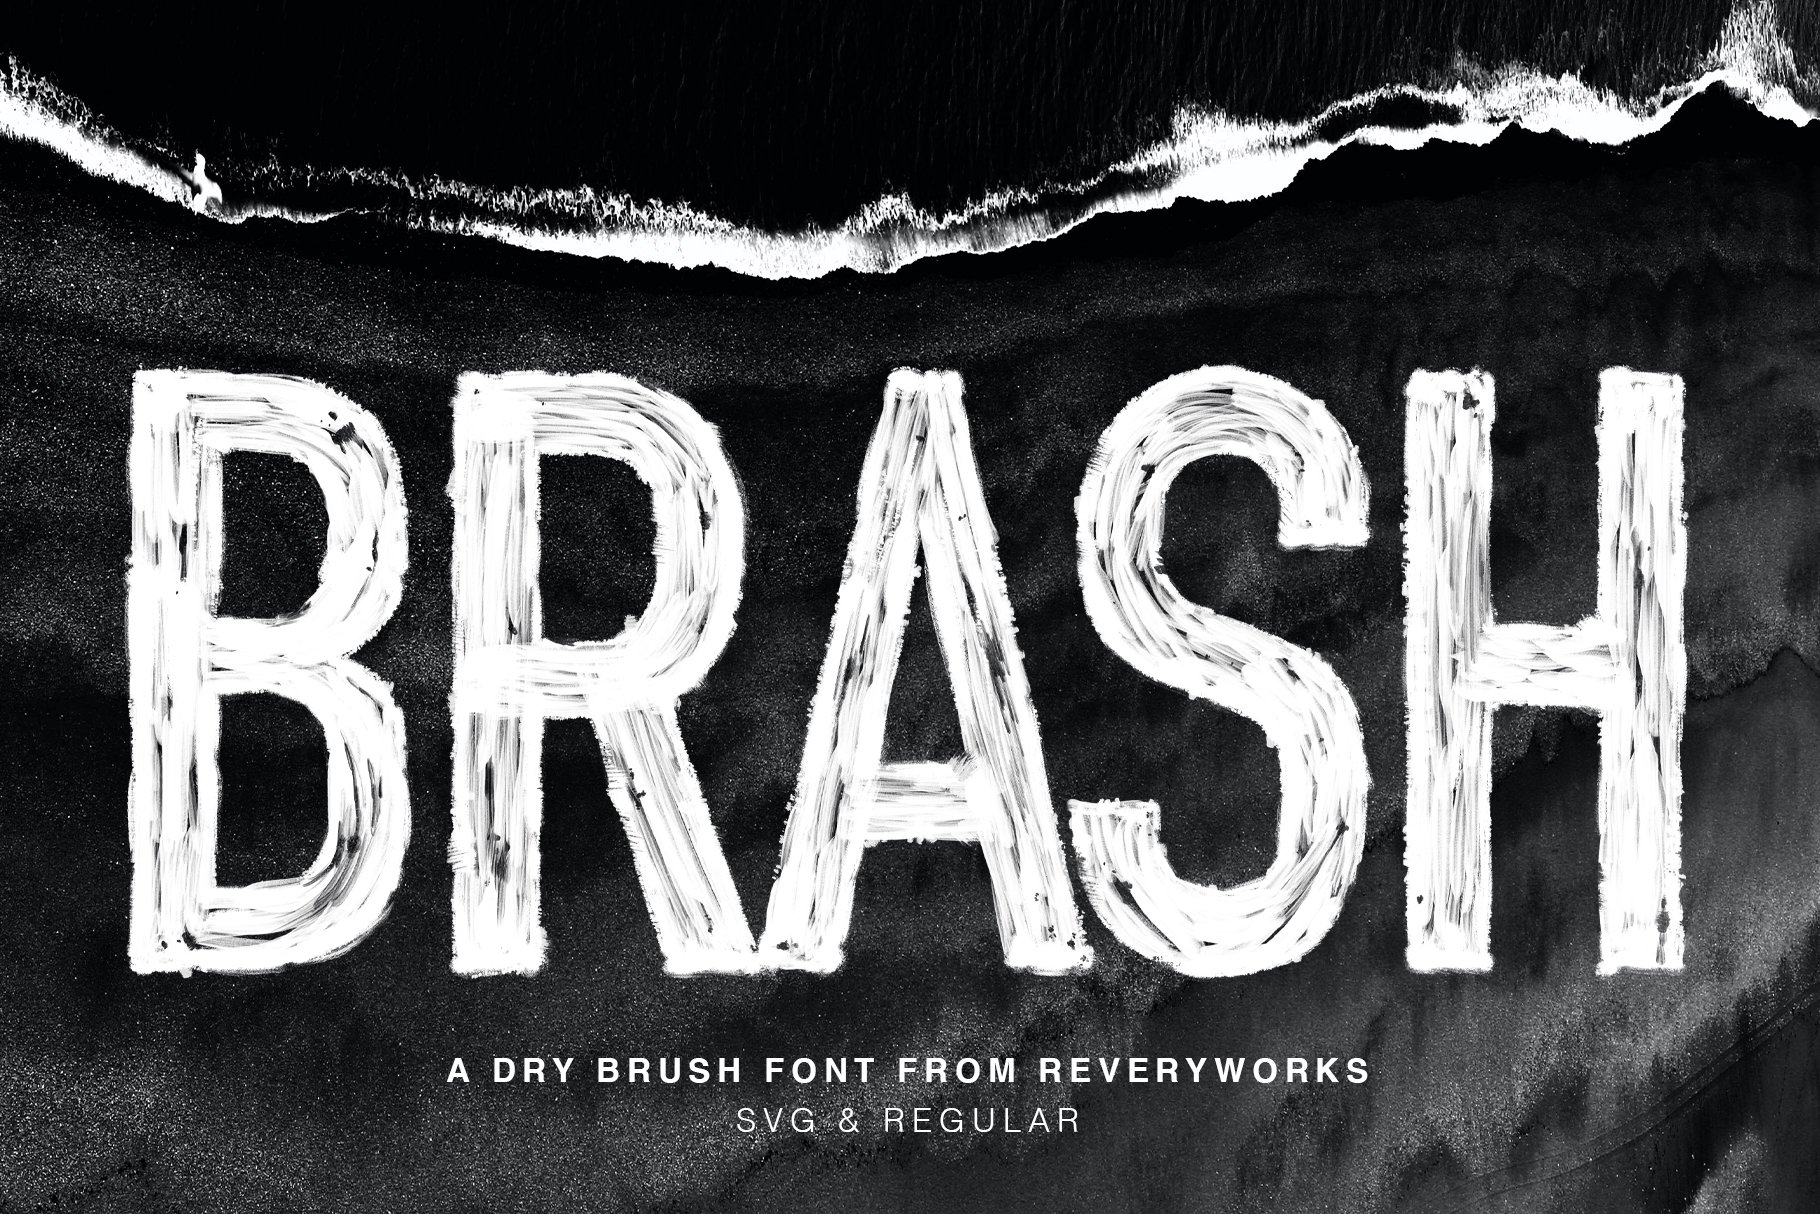 BRASH - A Dry Brush Font cover image.